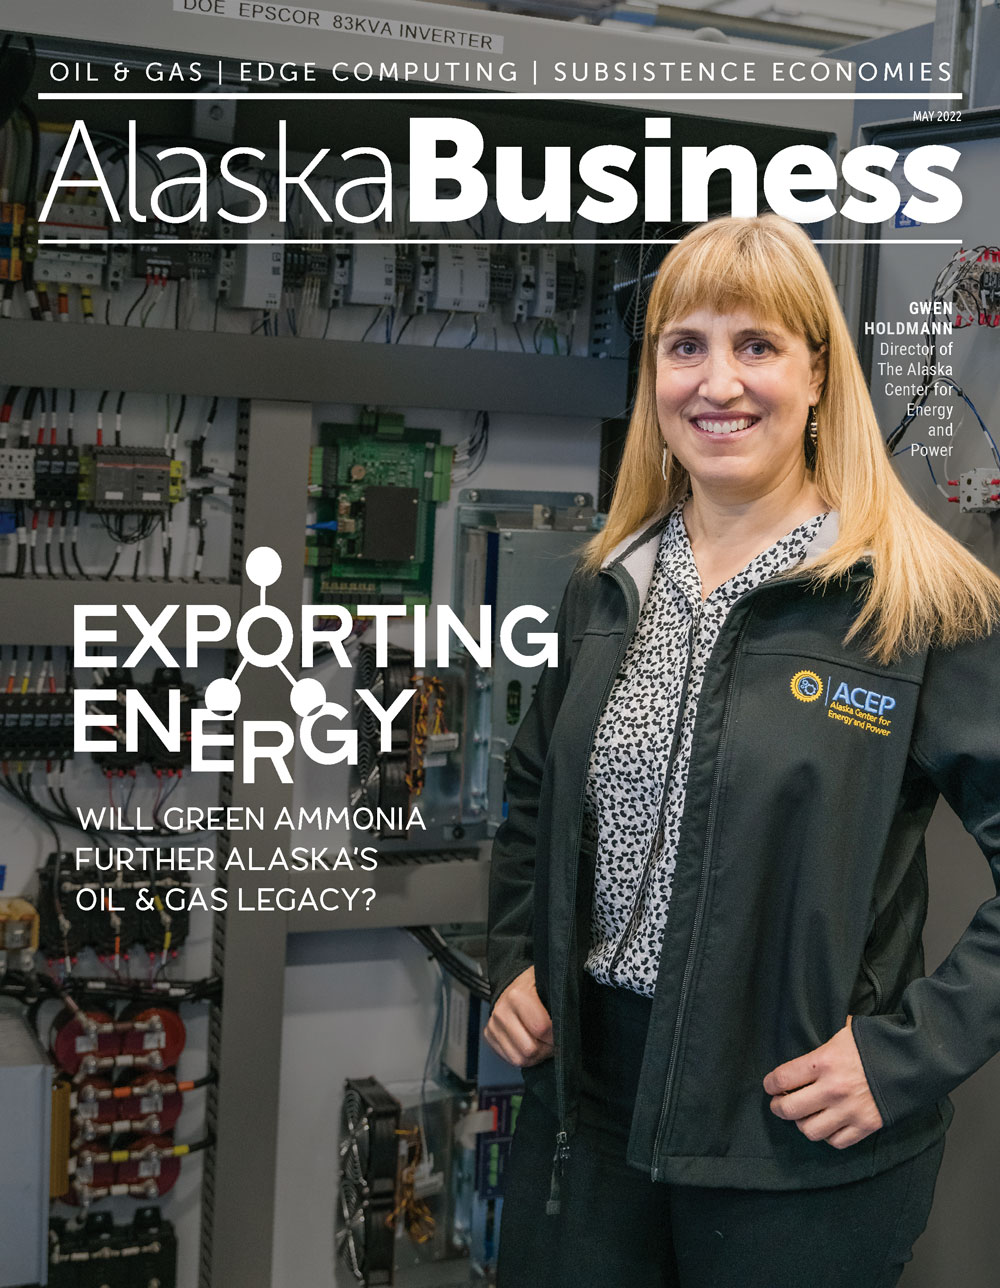 Alaska Business May 2022 cover